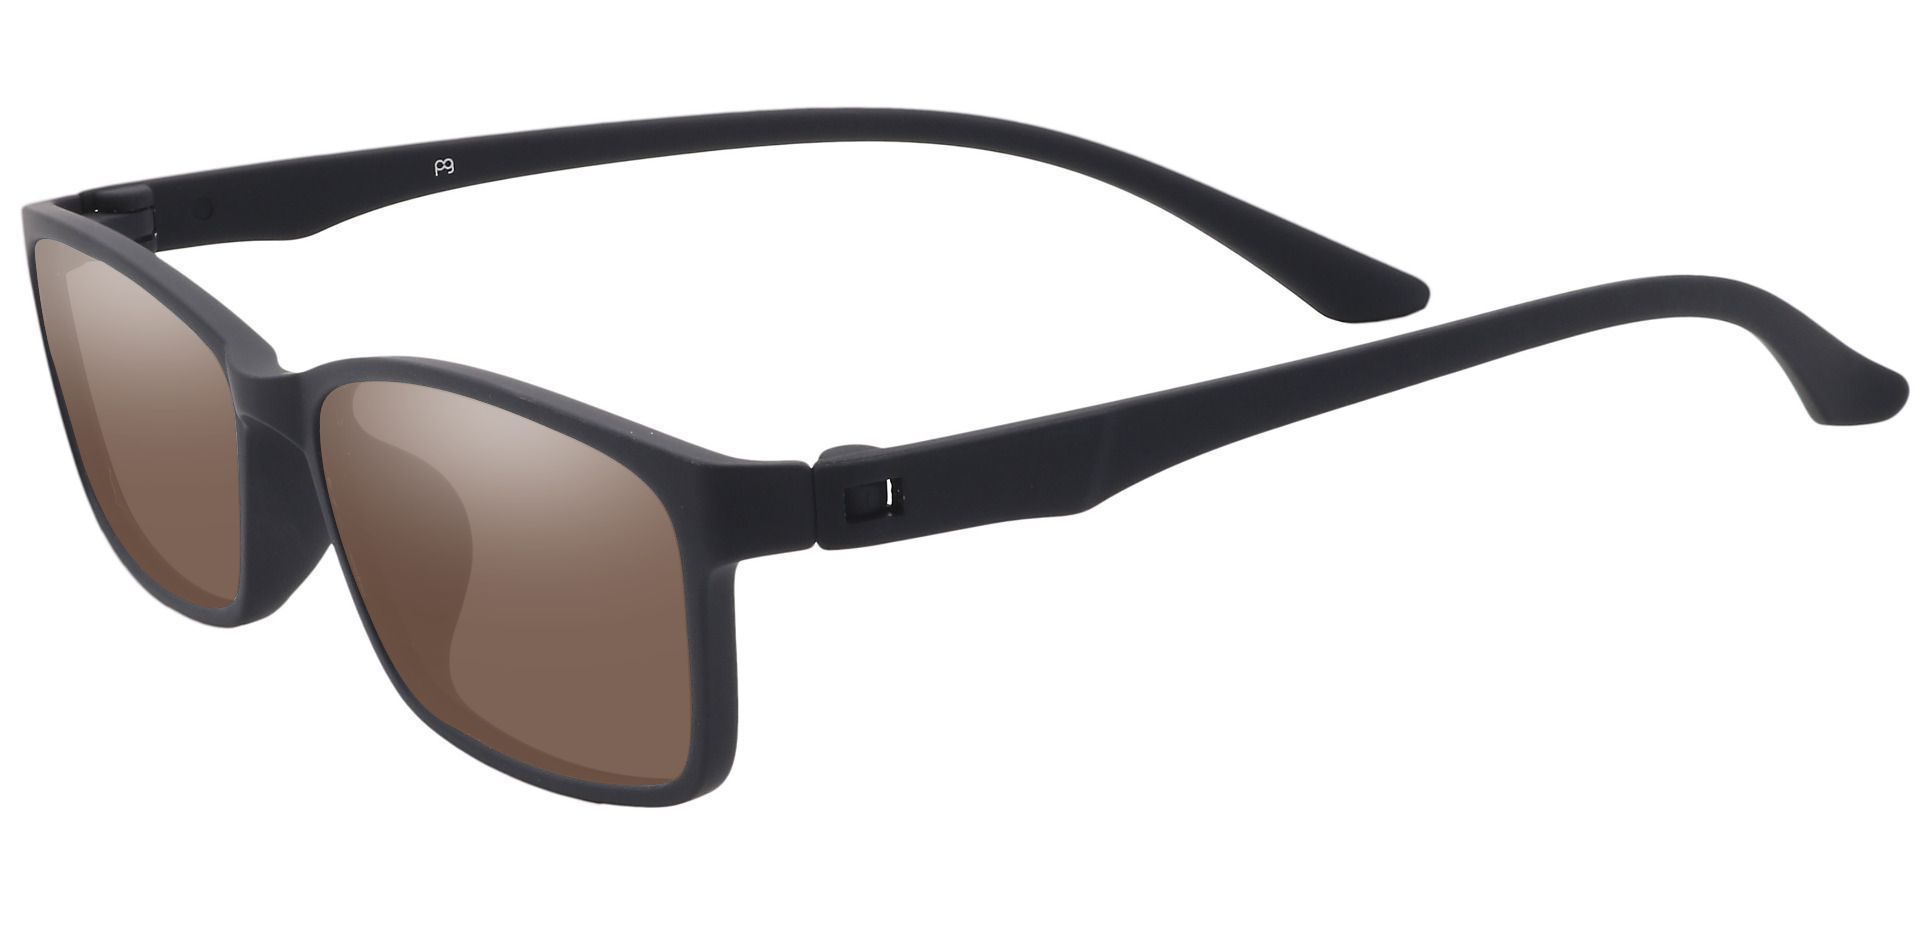 Wichita Rectangle Non-Rx Sunglasses -  Black Frame With Brown Lenses